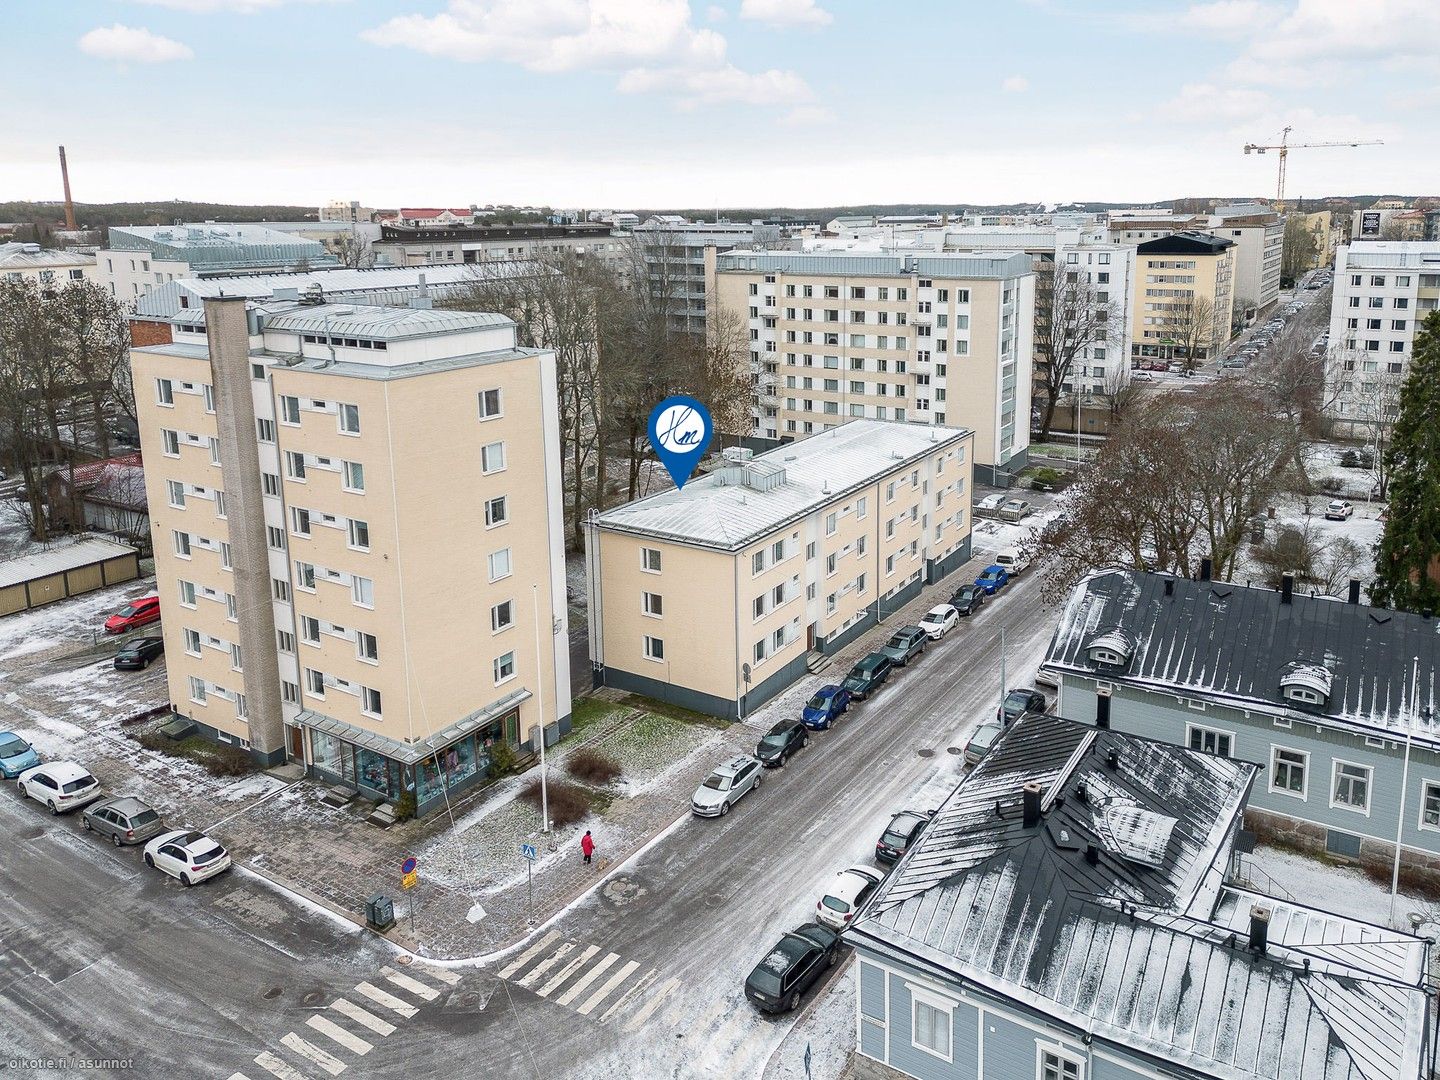 48 m² Luostarinkatu 6 B, 20700 Turku 2h+kk+ph/wc+vh+parveke – Oikotie  17136504 – SKVL